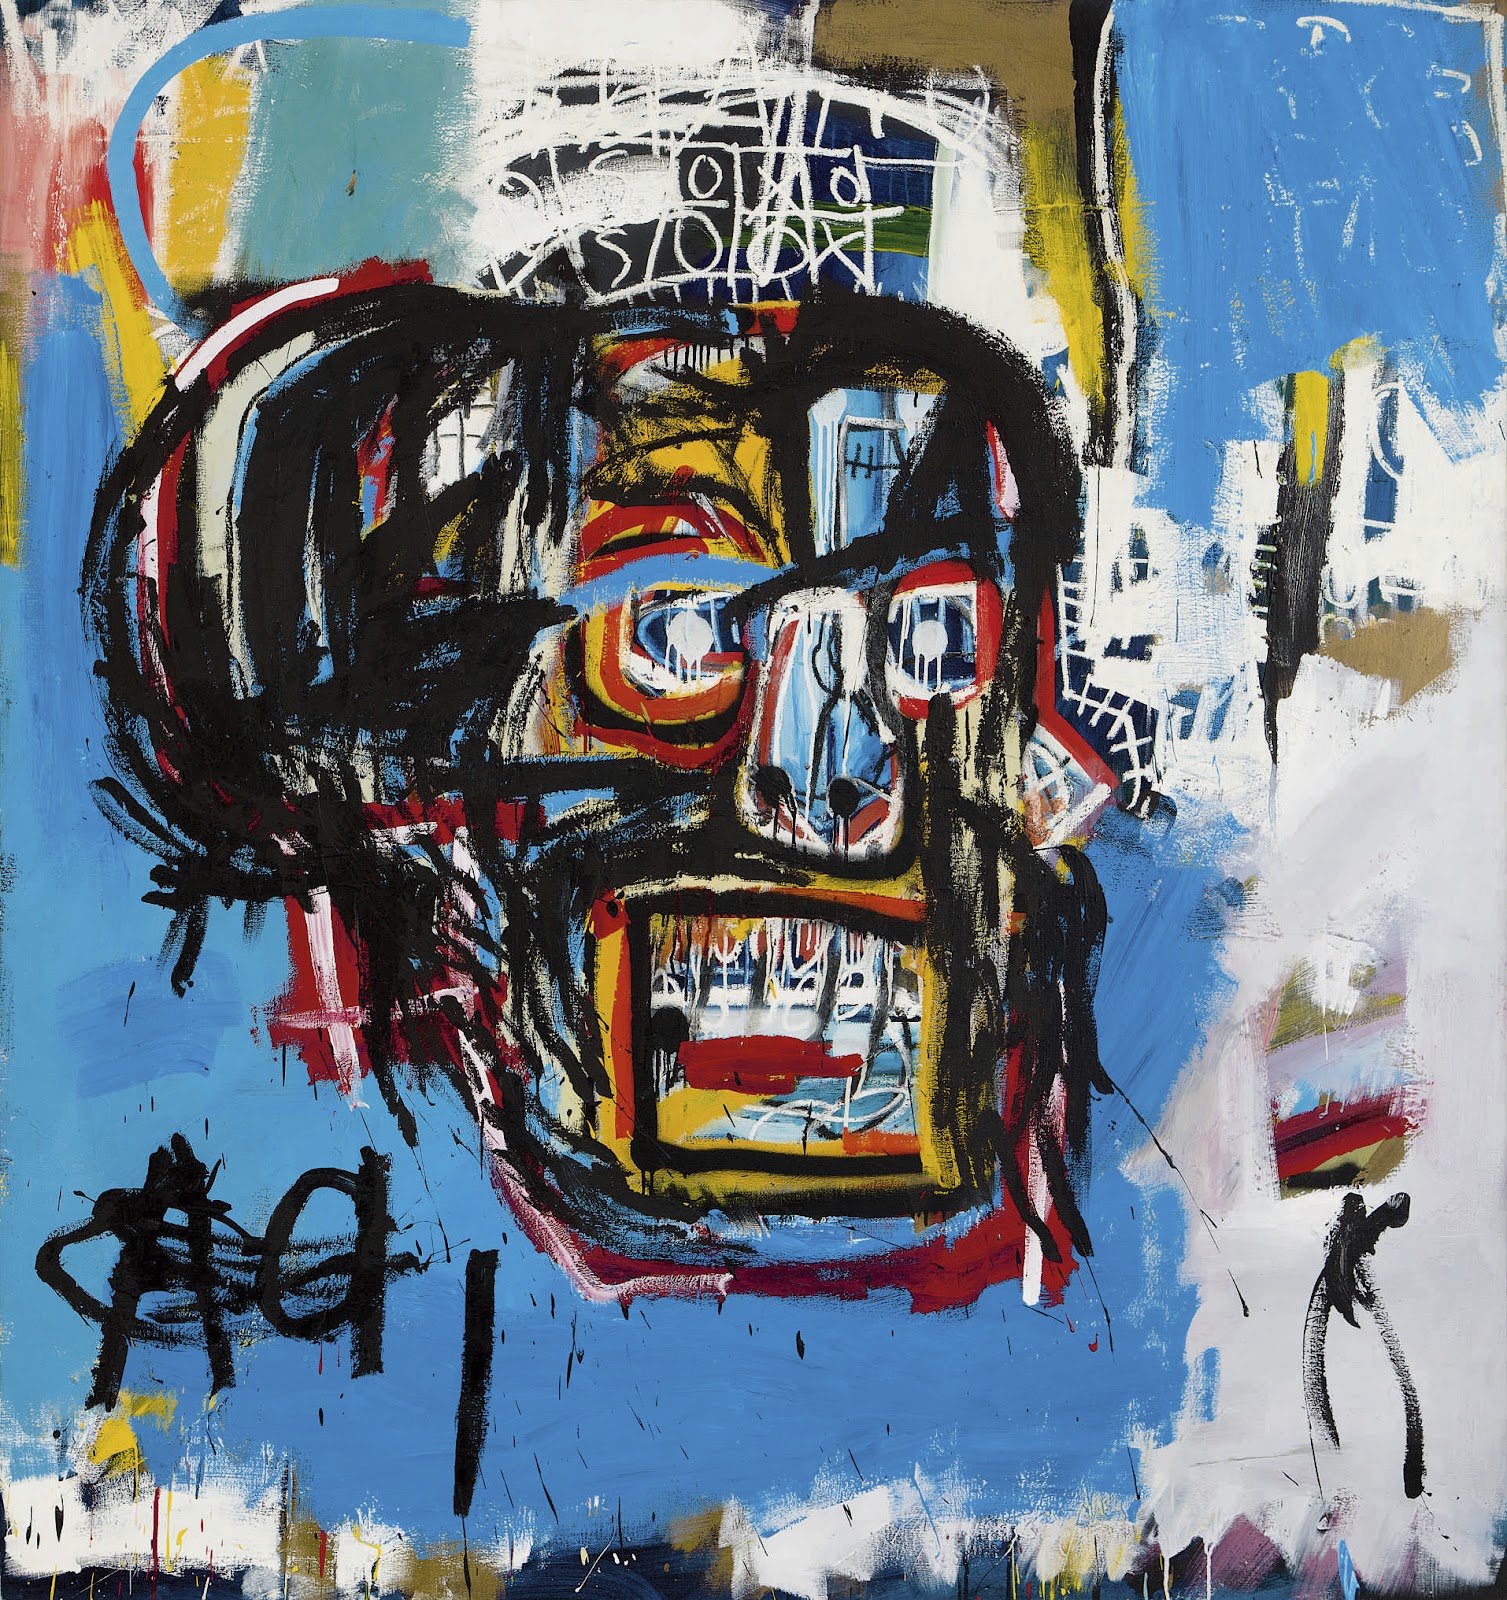 In 2017, Jean-Michel Basquiat’s 1982 work “Untitled” (Skull)